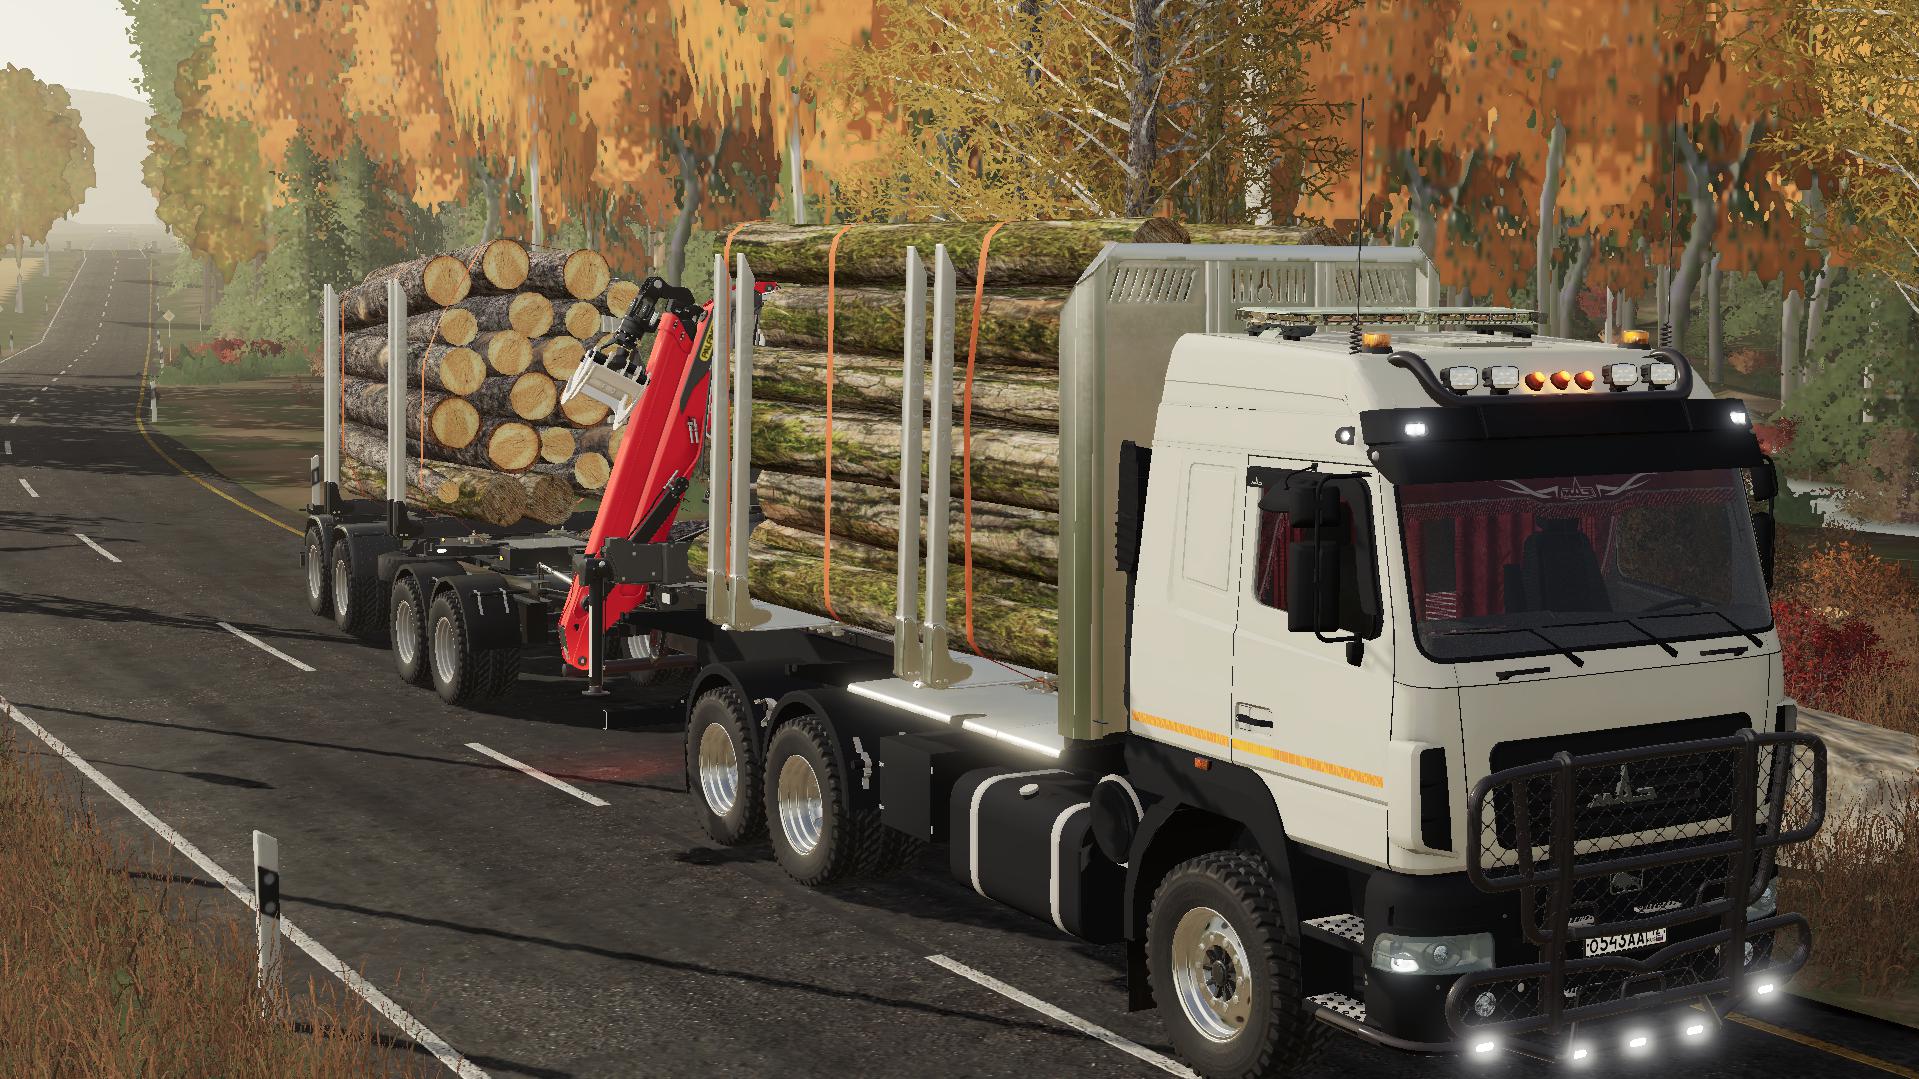 farming simulator 22 trucks mods